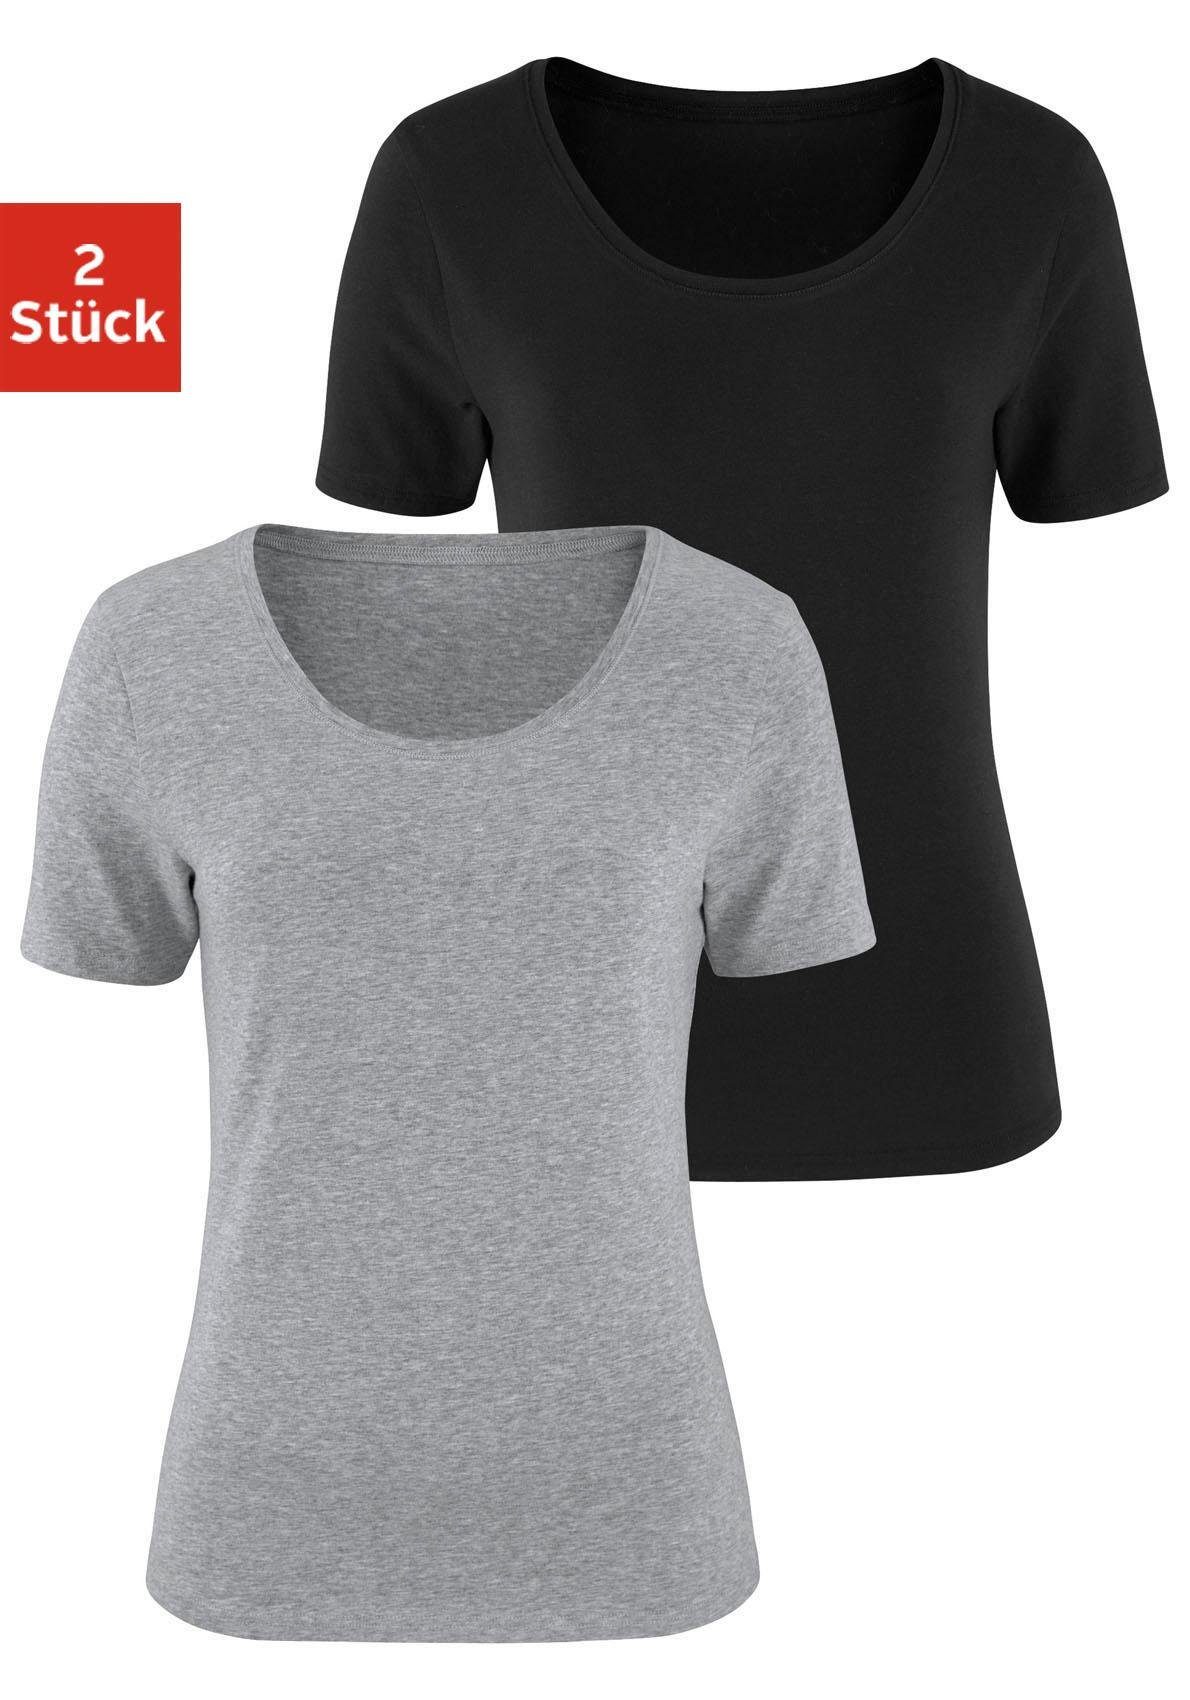 Vivance Kurzarmshirt (2er-Pack) aus elastischer Baumwoll-Qualität grau-meliert, schwarz